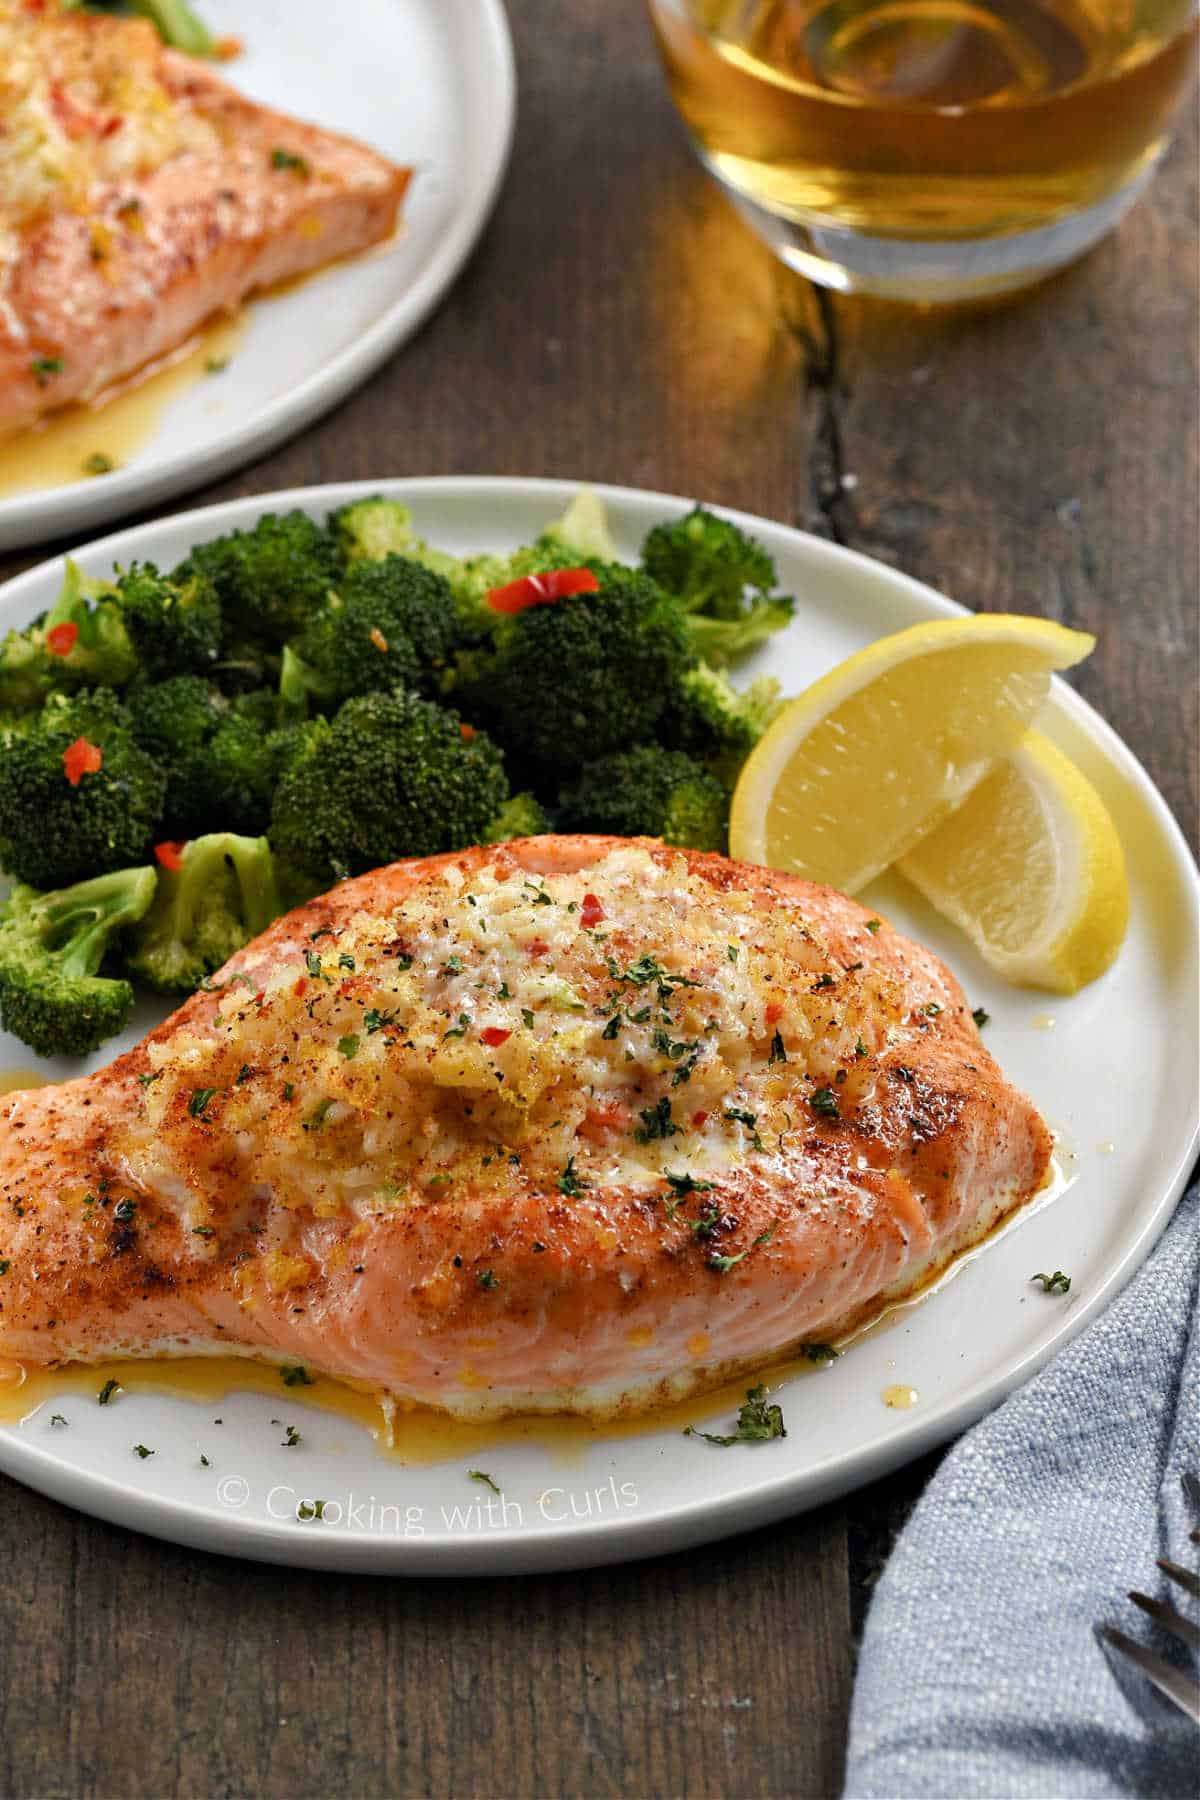 Plate with crab stuffed salmon, broccoli and lemon wedges.